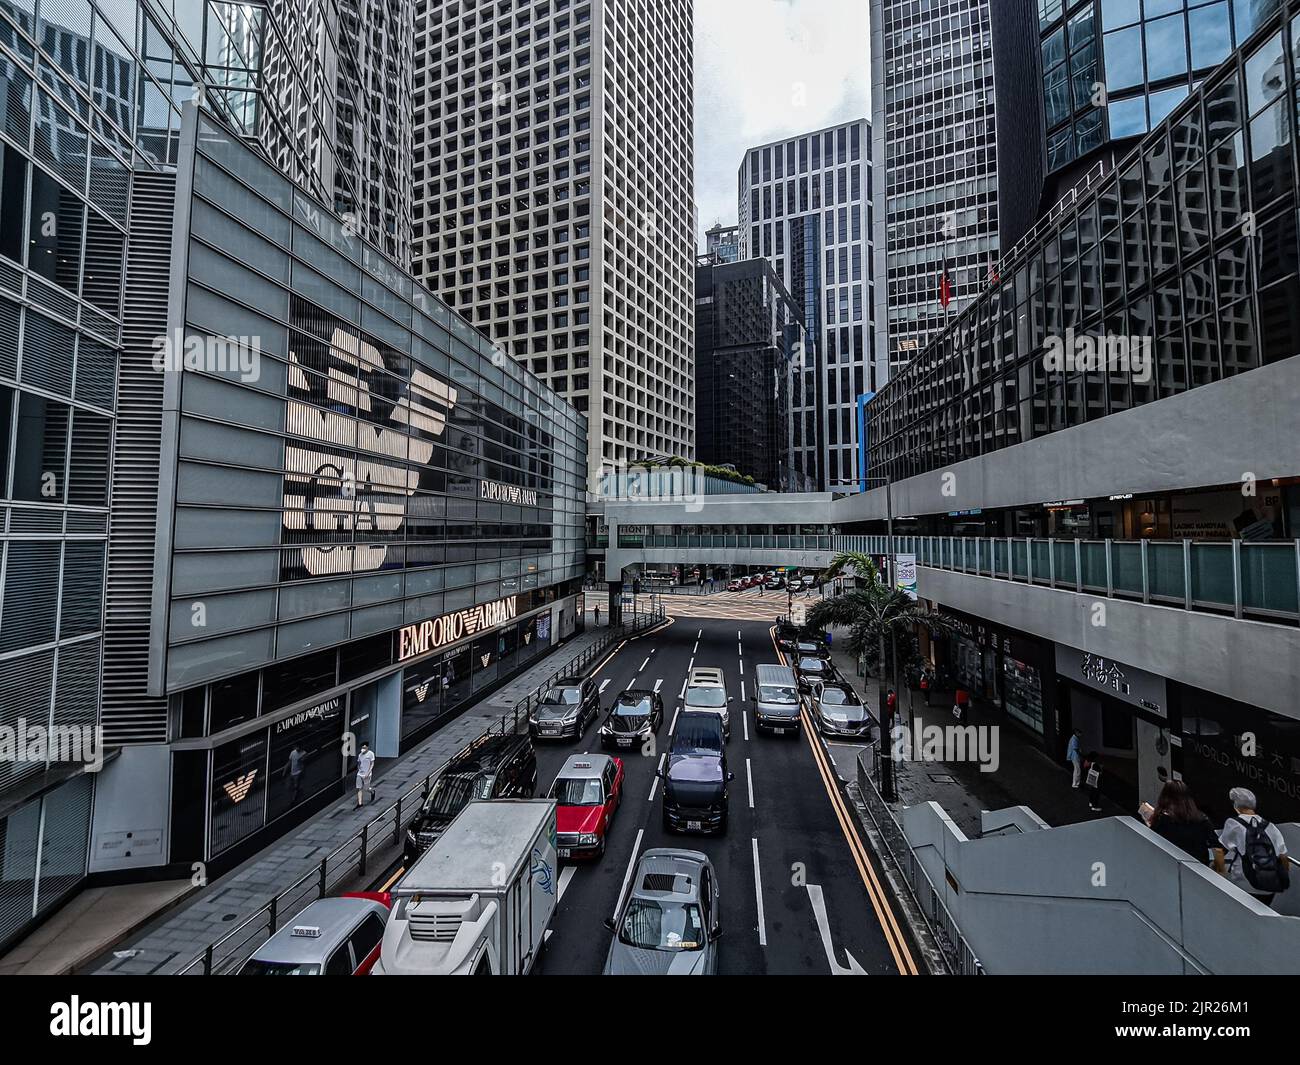 A beautiful shot of the central street in Hong Kong, China Stock Photo